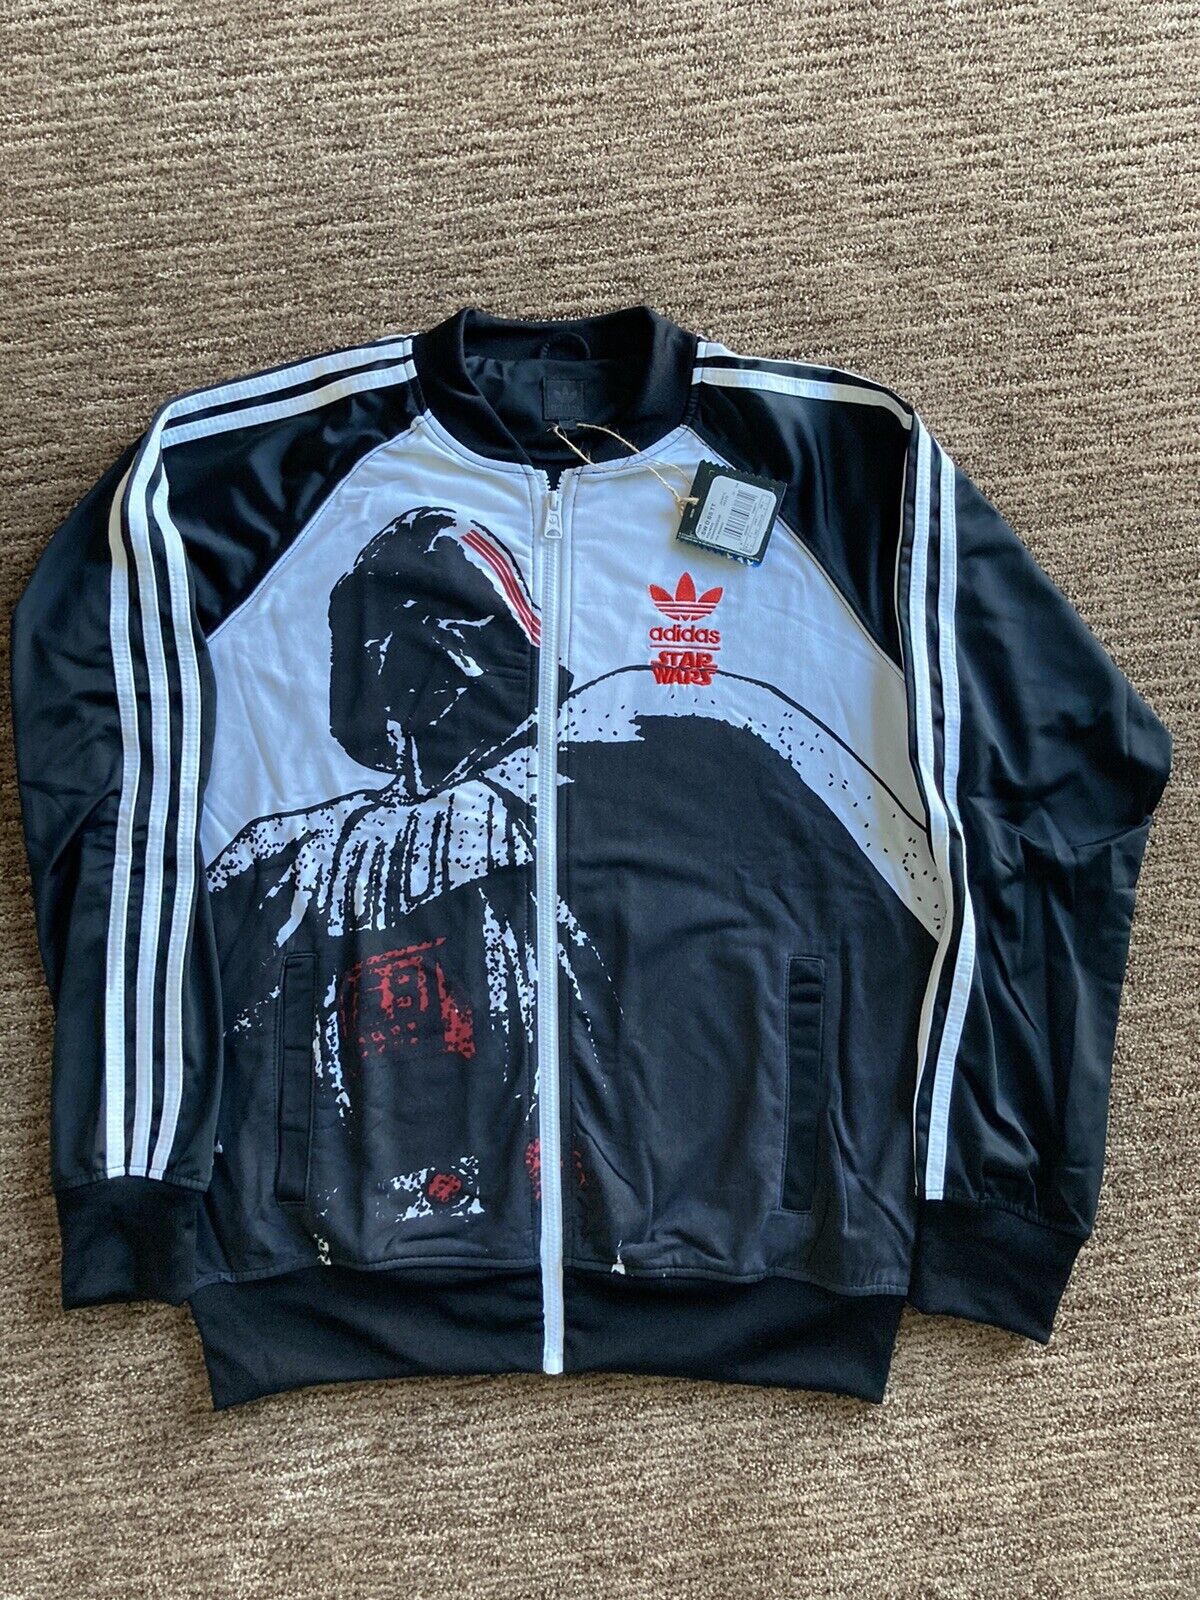 Adidas Originals Star Darth Vader Zip Up Track Jacket Size Large | eBay